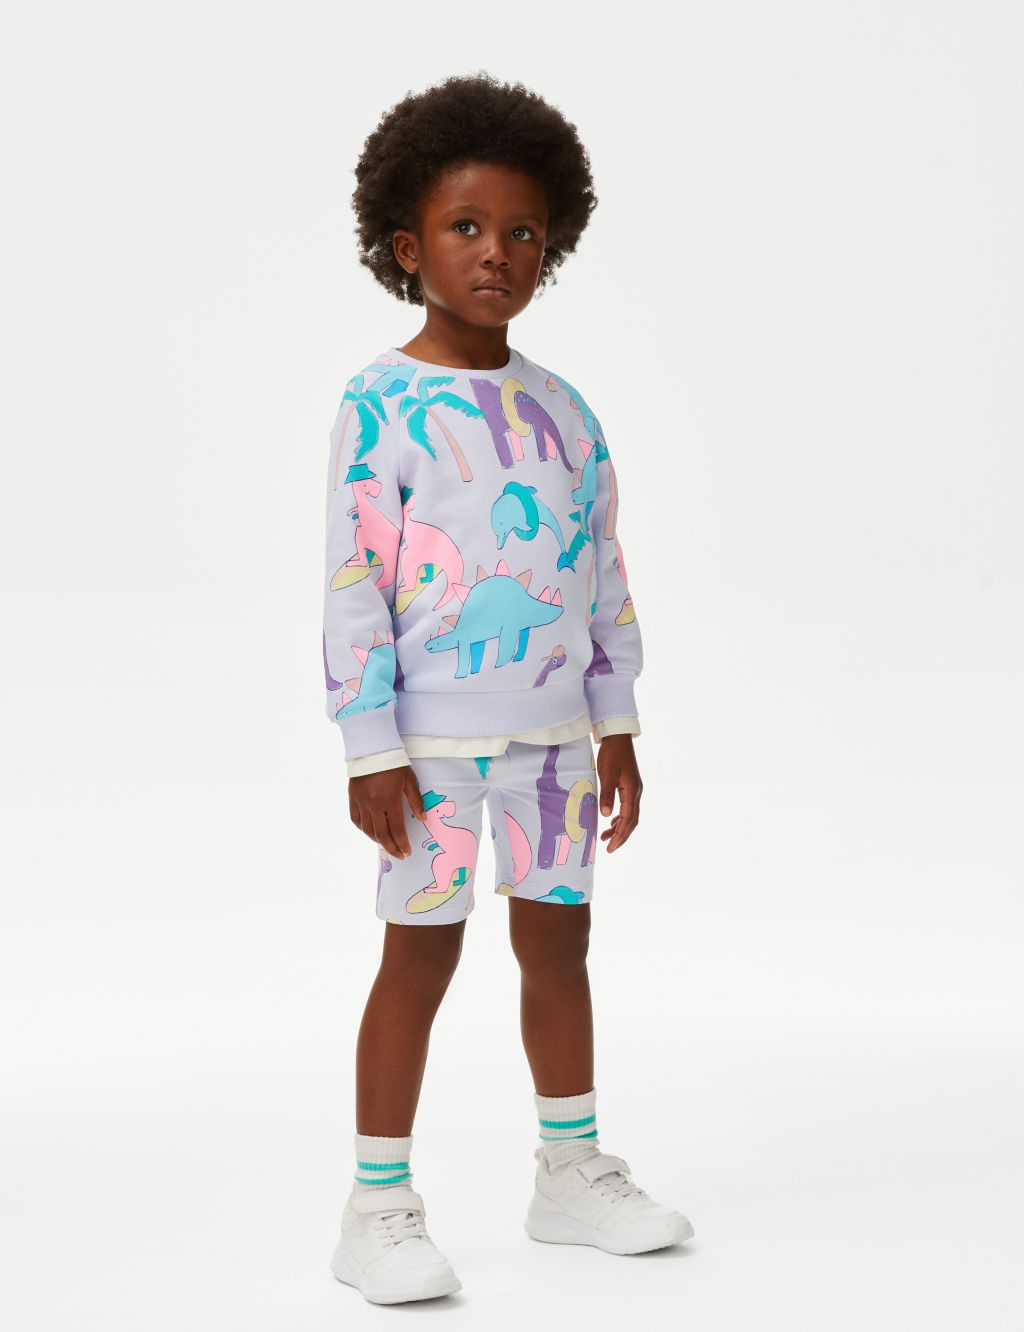 Little Girls (4-6x) Keep Smiling Tie Dye printed Boy Shorts